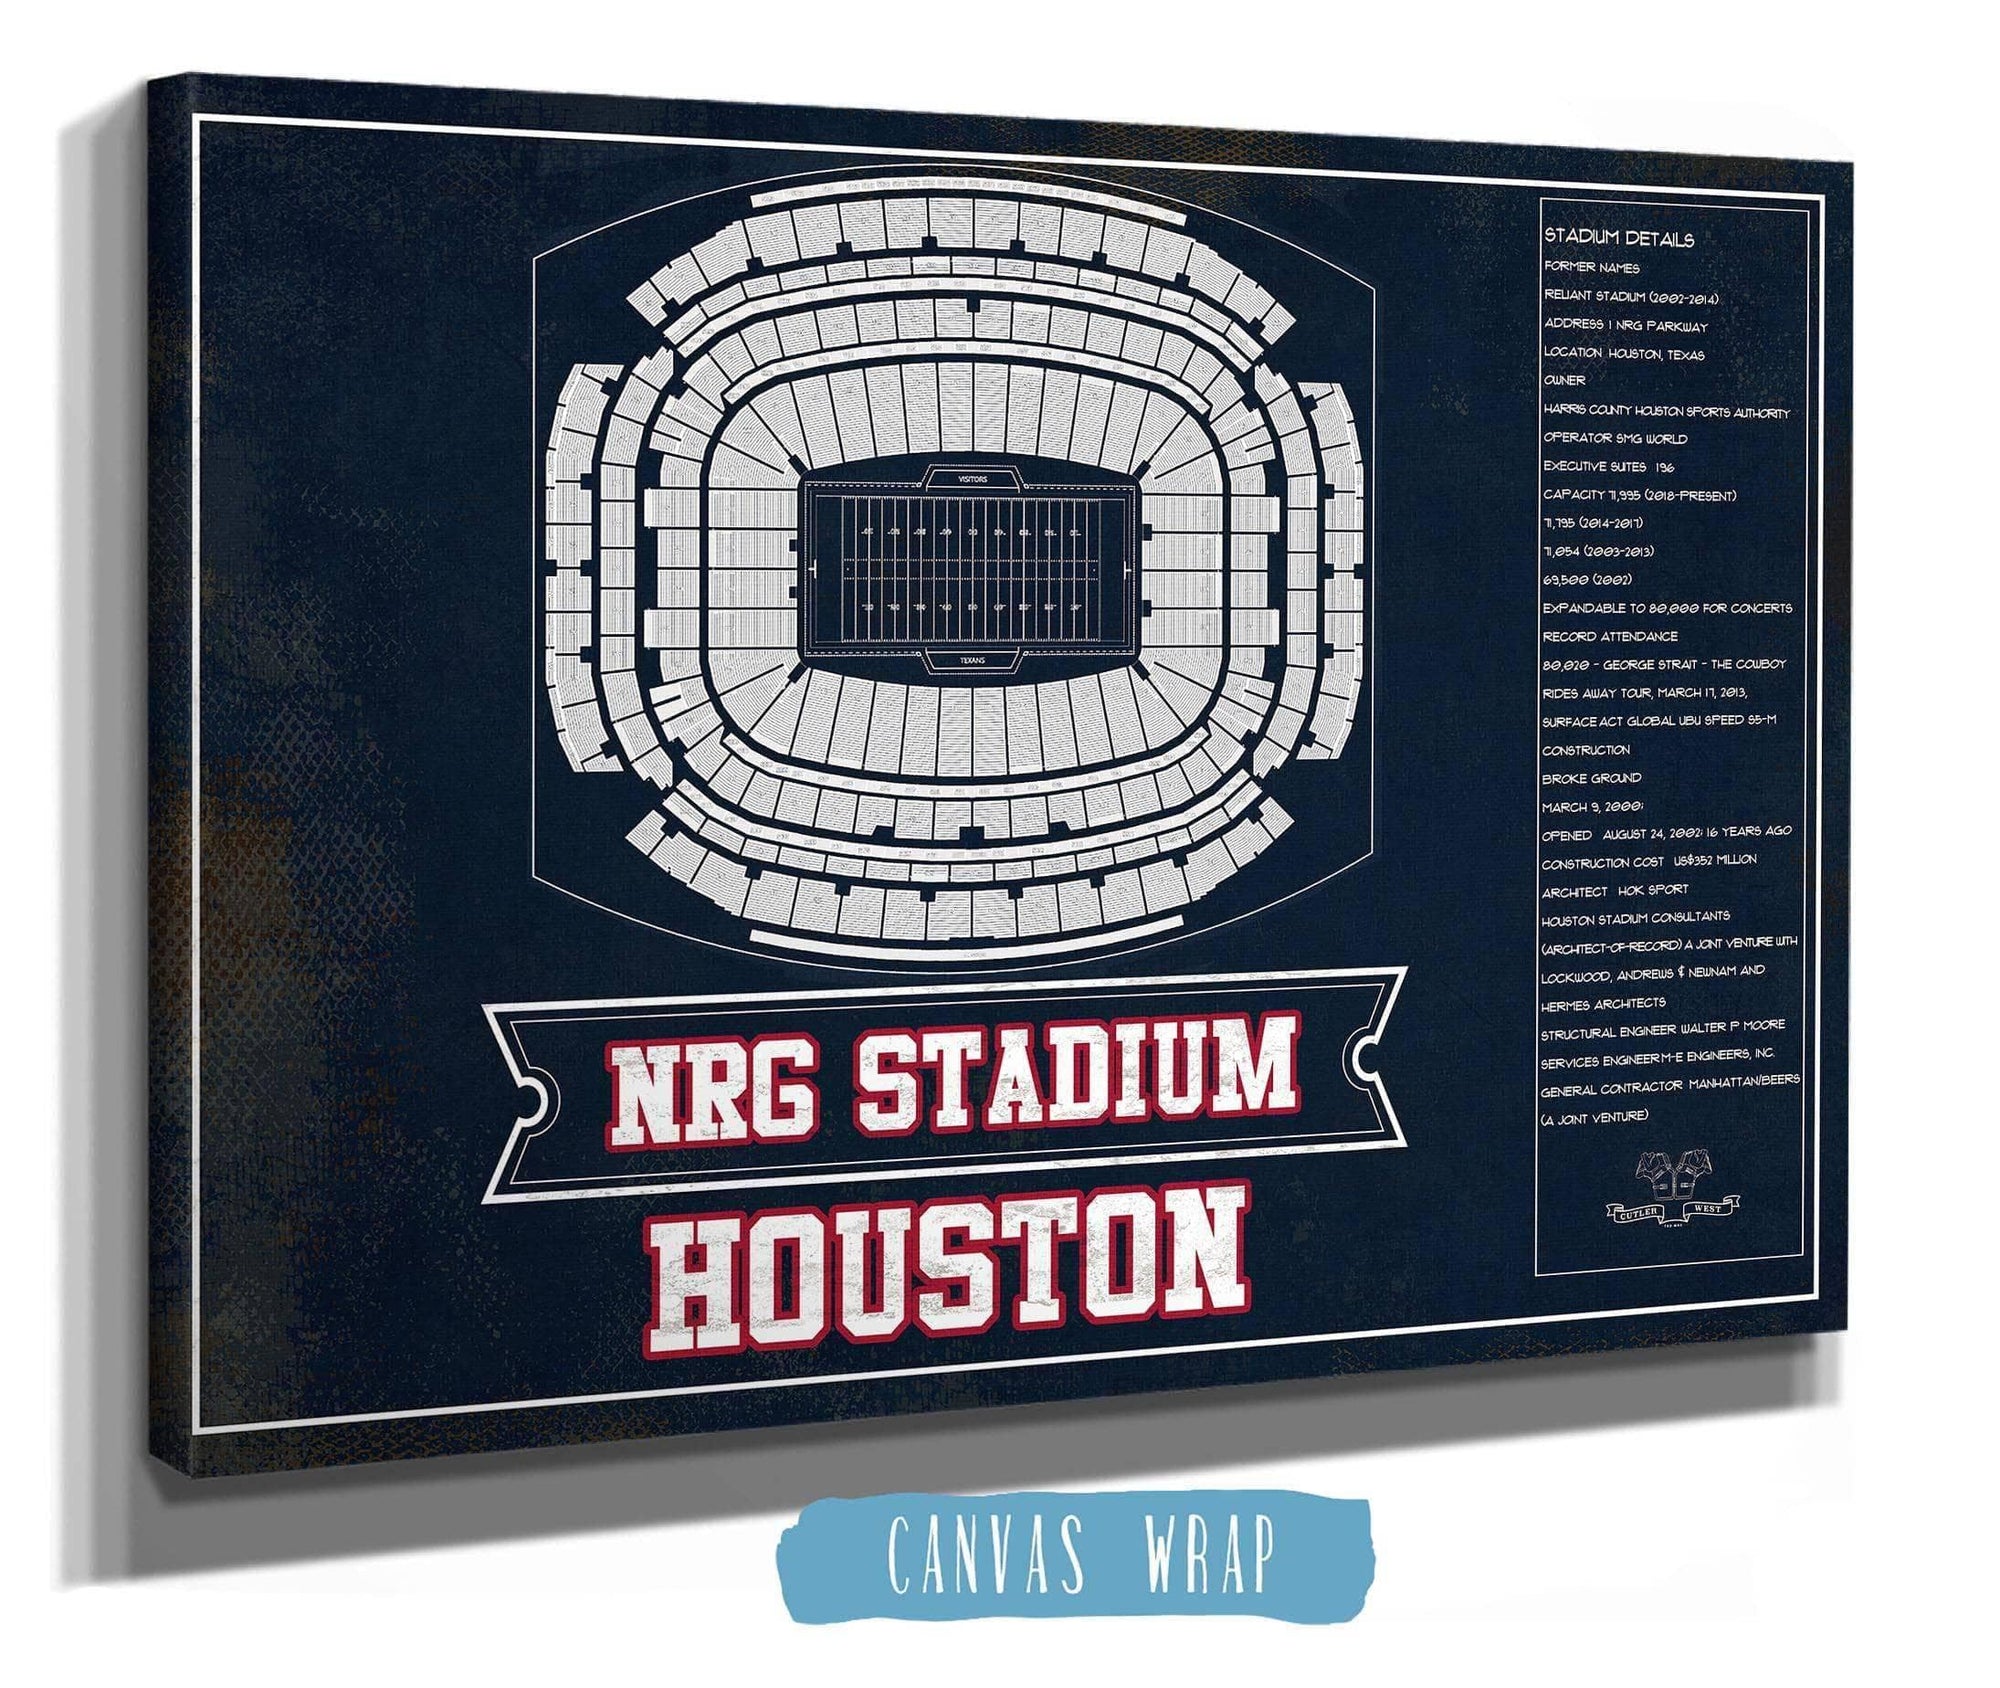 Cutler West Pro Football Collection Houston Texans NRG Stadium Seating Chart - Vintage Football Print